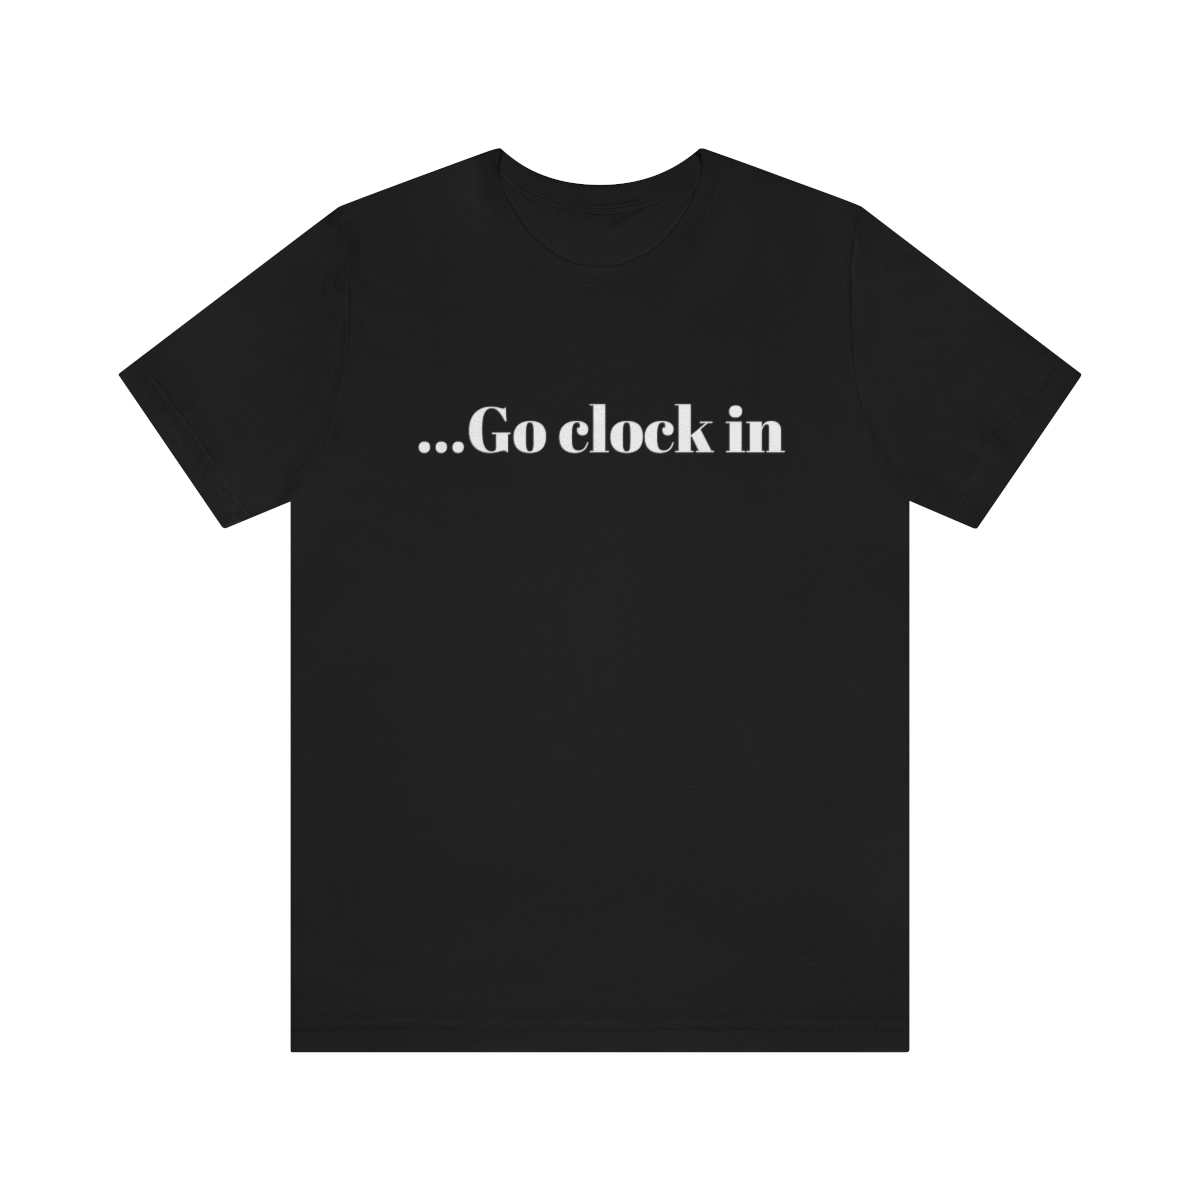 …Go clock in t-shirt